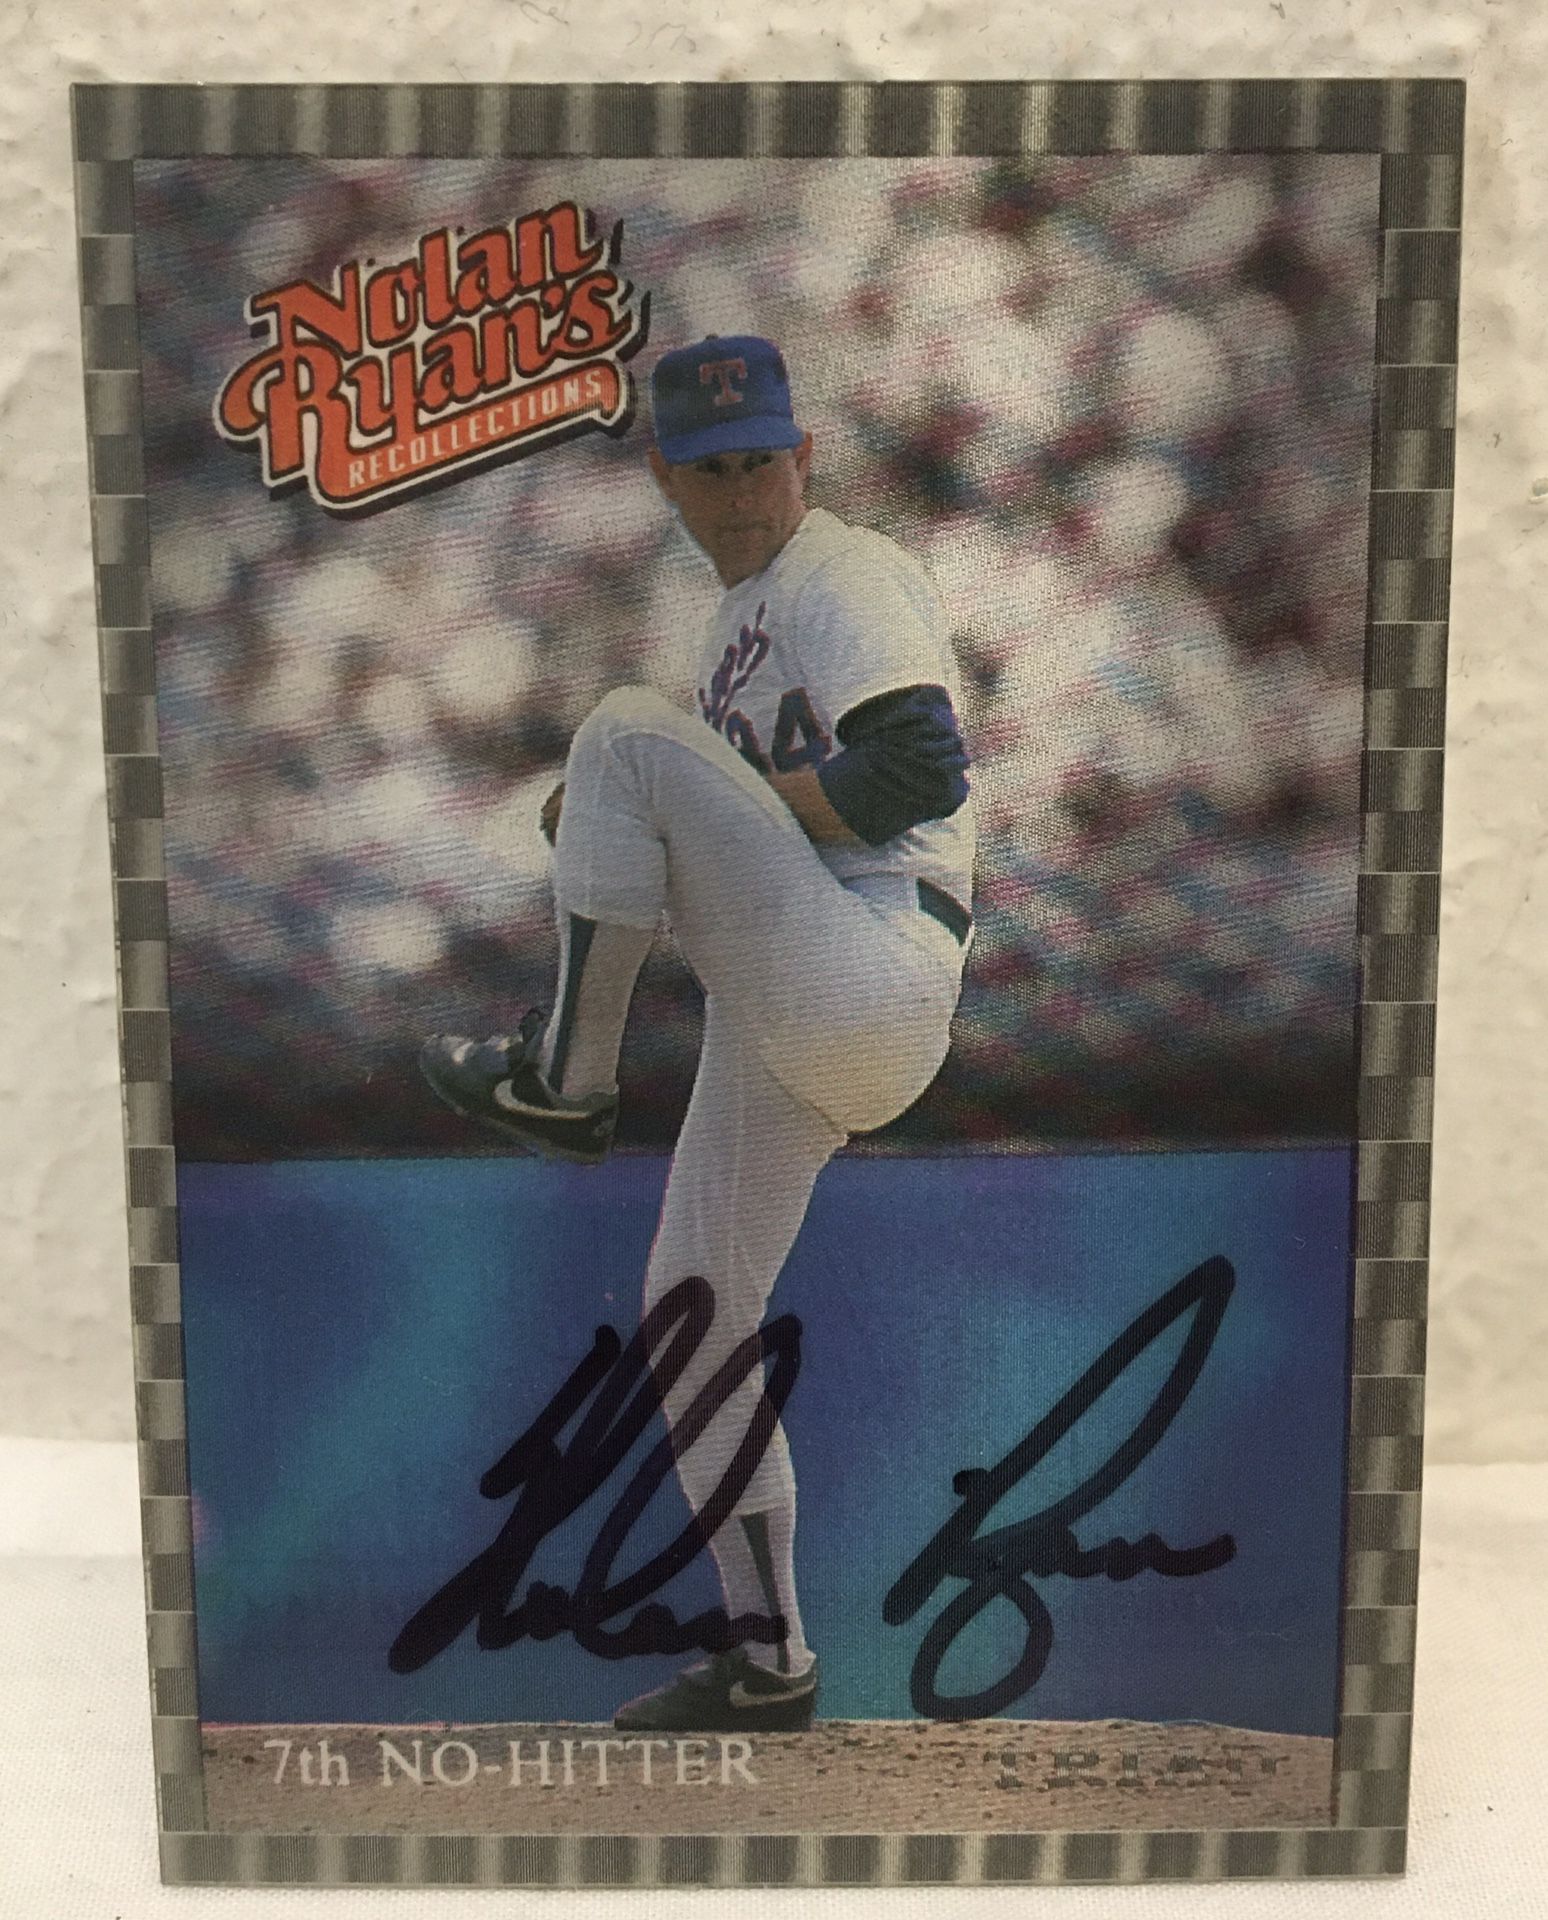 Nolan Ryan live autographed 1993 Whataburger baseball card $25